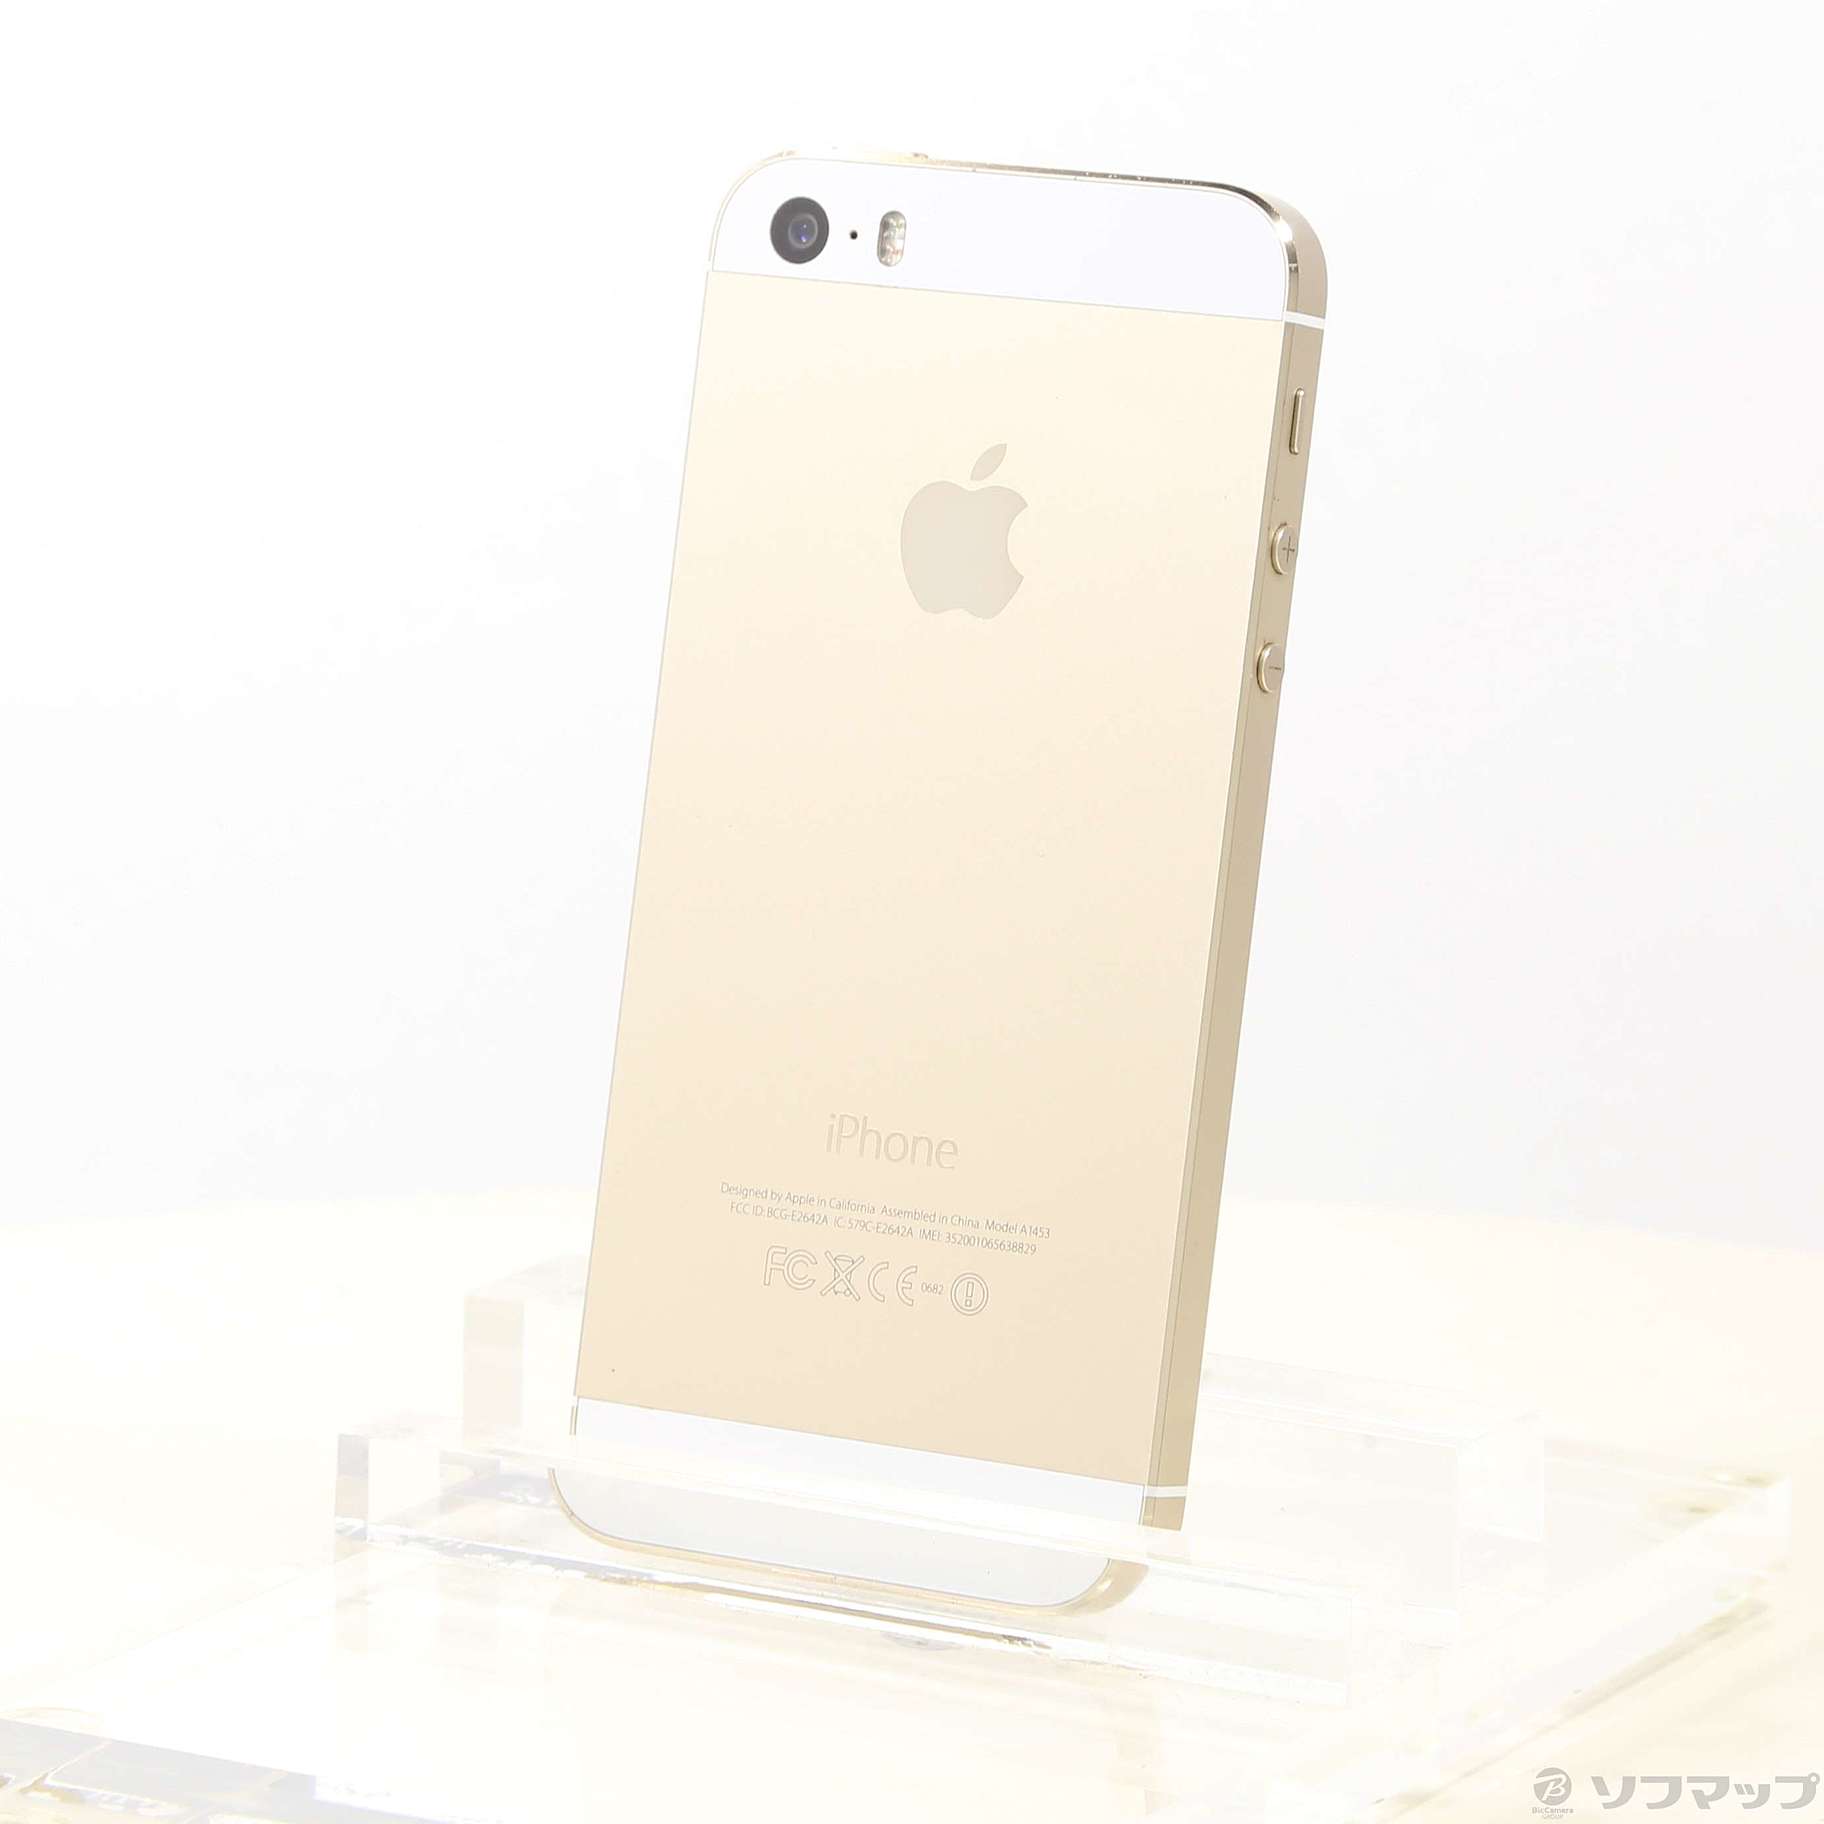 Apple iPhone5s docomo 16GB gold ゴールド